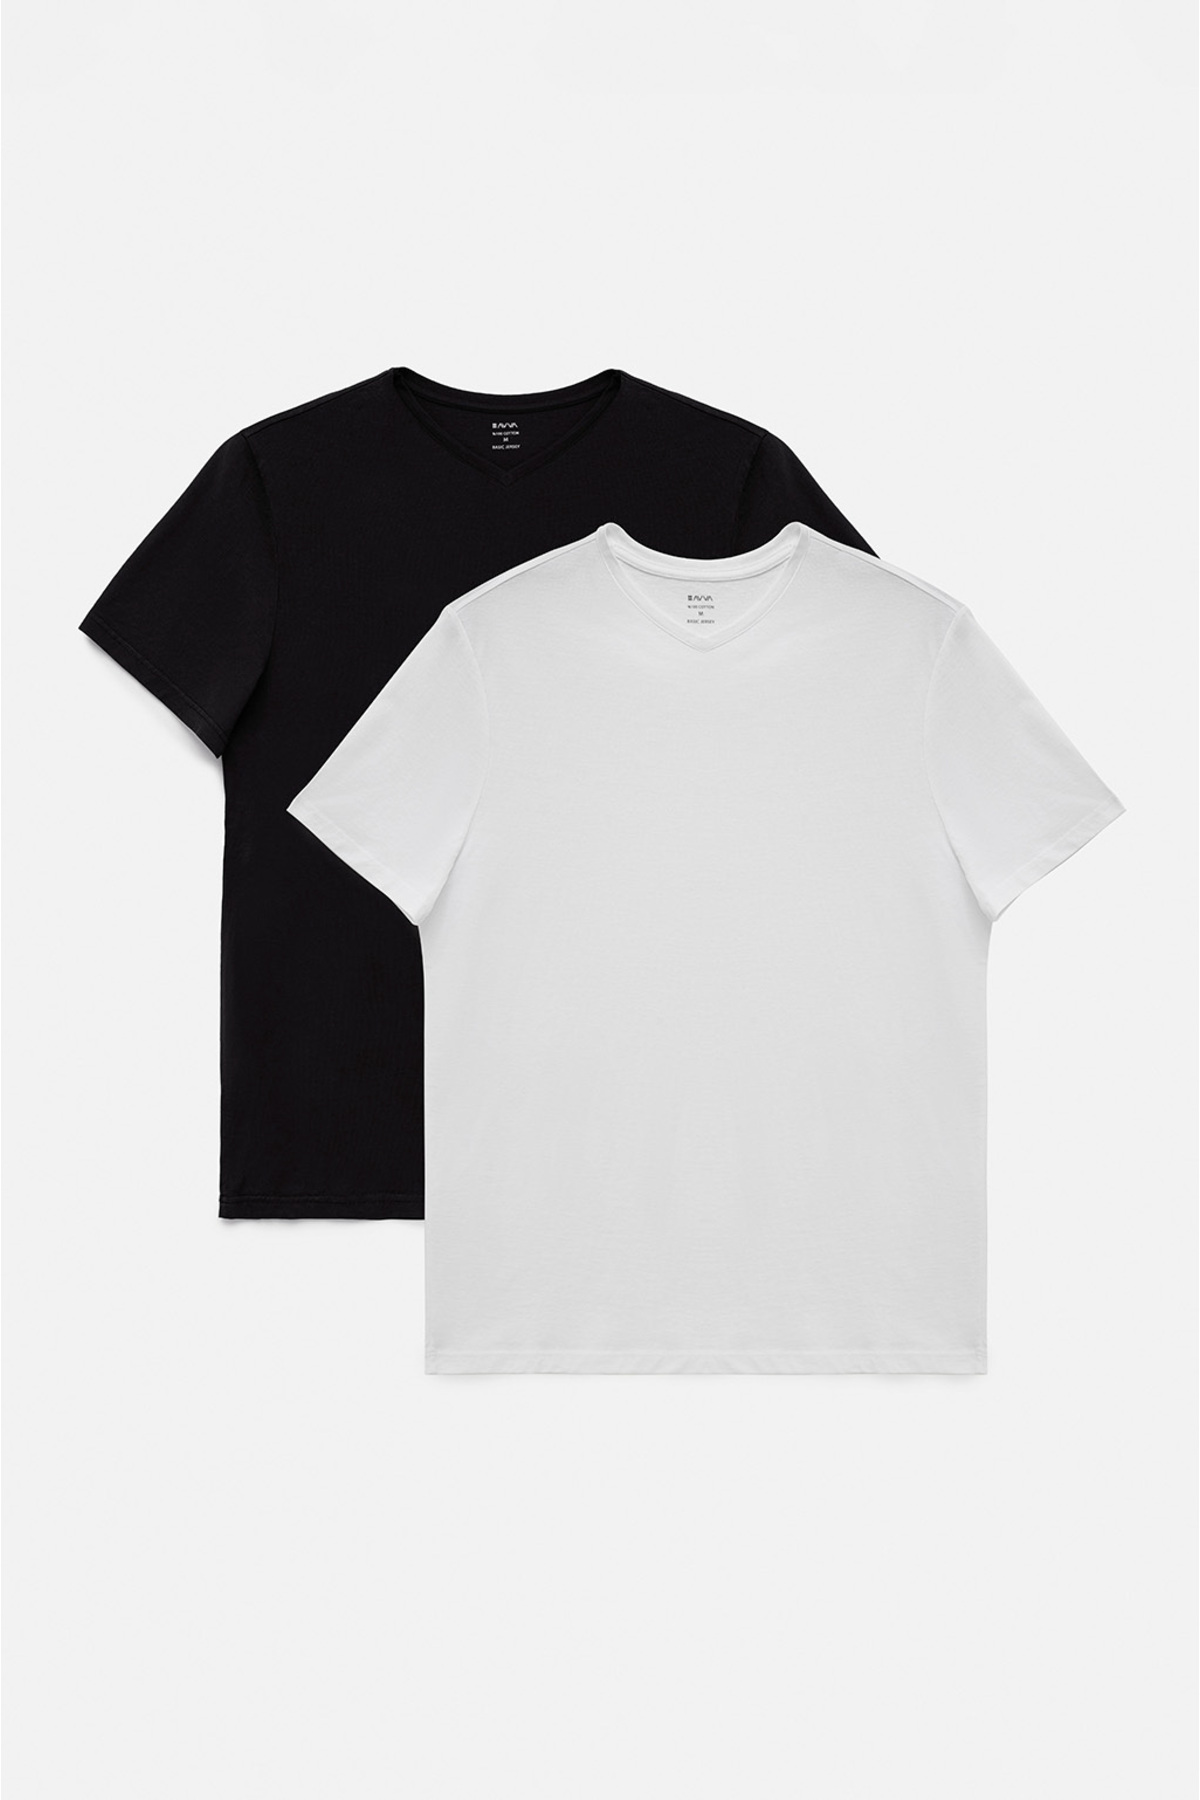 Avva Men's Black-white 2-Piece V-Neck Plain 100% Cotton Standard Fit Regular Cut T-shirt